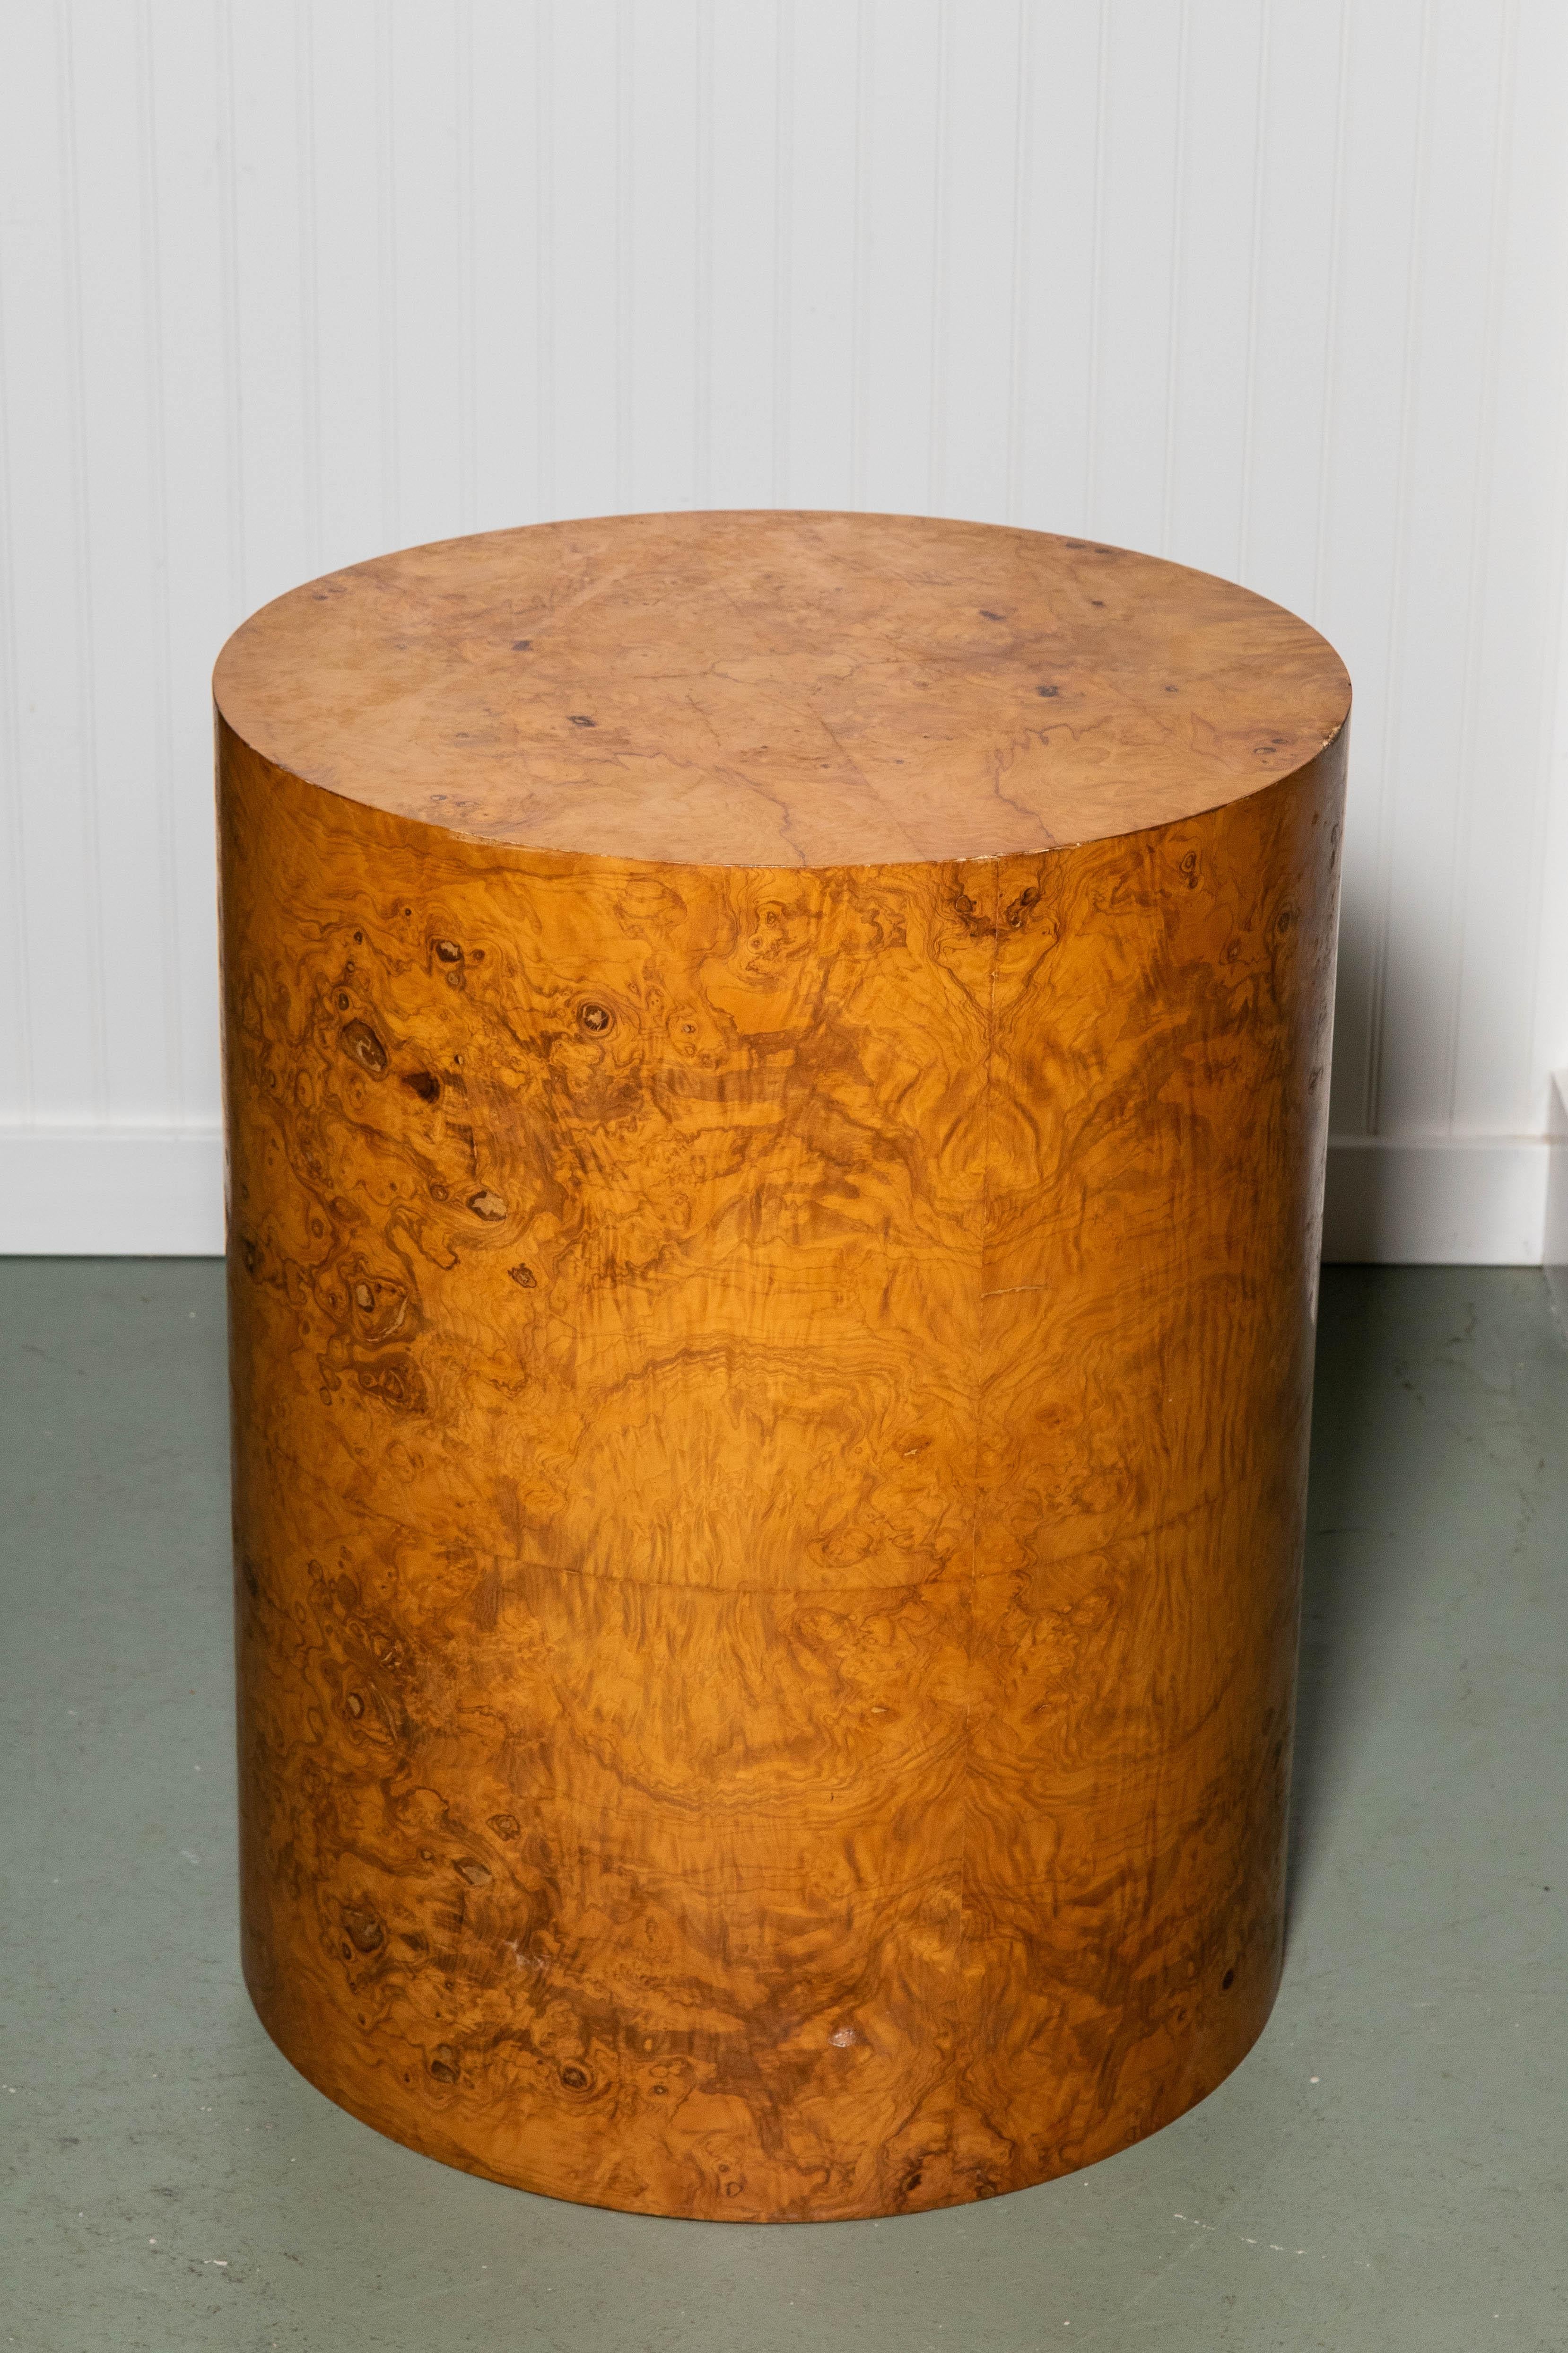 Pair of Milo Baughman drum tables in bird's-eye maple veneer for Thayer Coggin with original label. Original label on bottom.